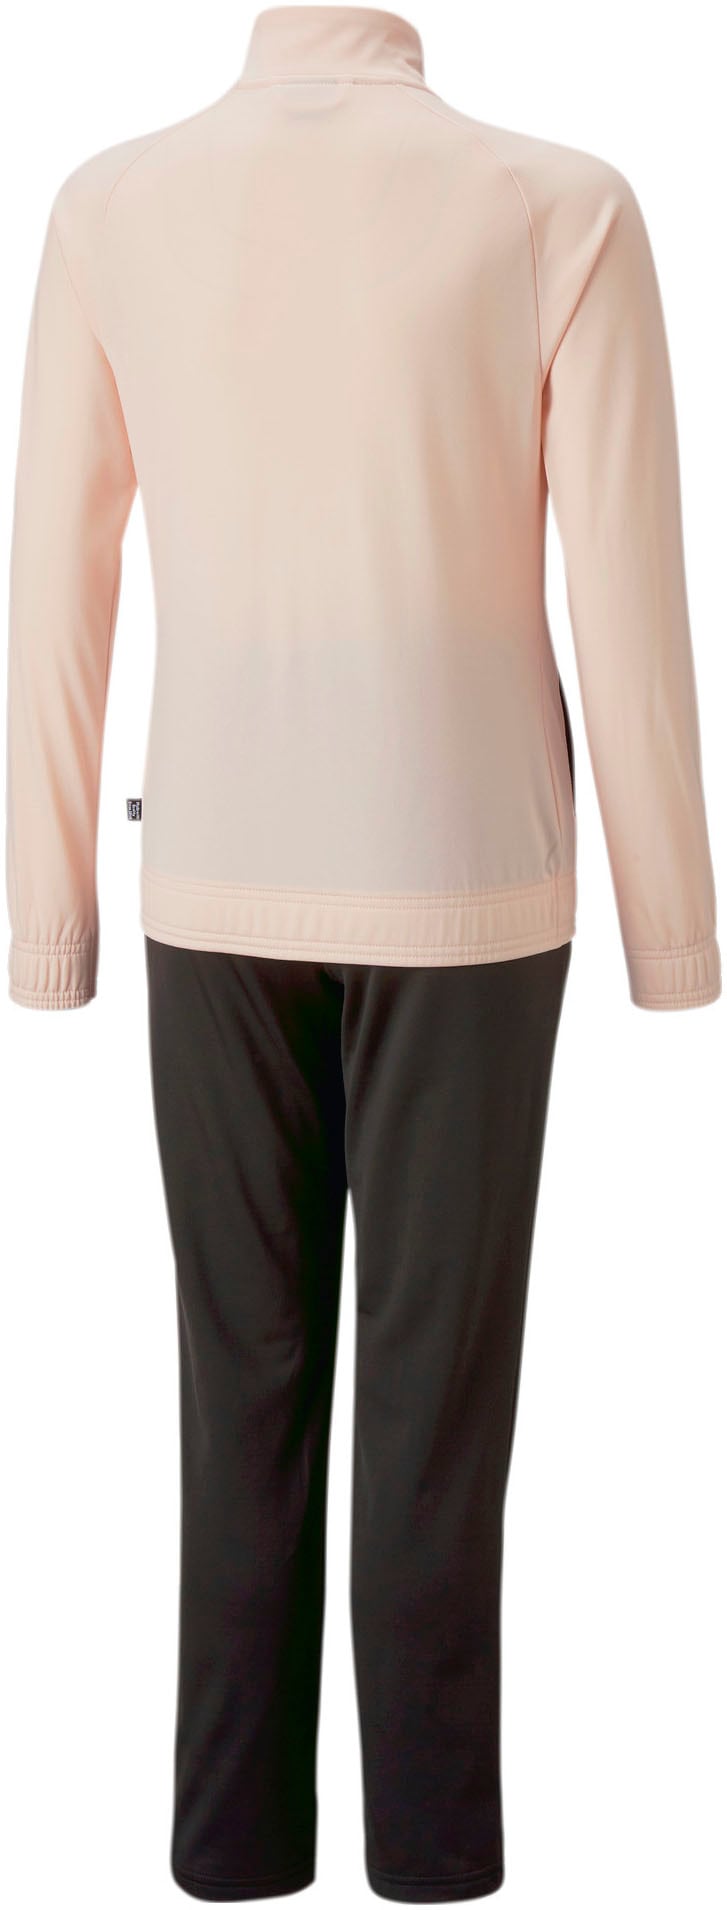 ohne tlg.) OP G«, (2 »TRICOT PUMA Trendige Mindestbestellwert Trainingsanzug shoppen SUIT